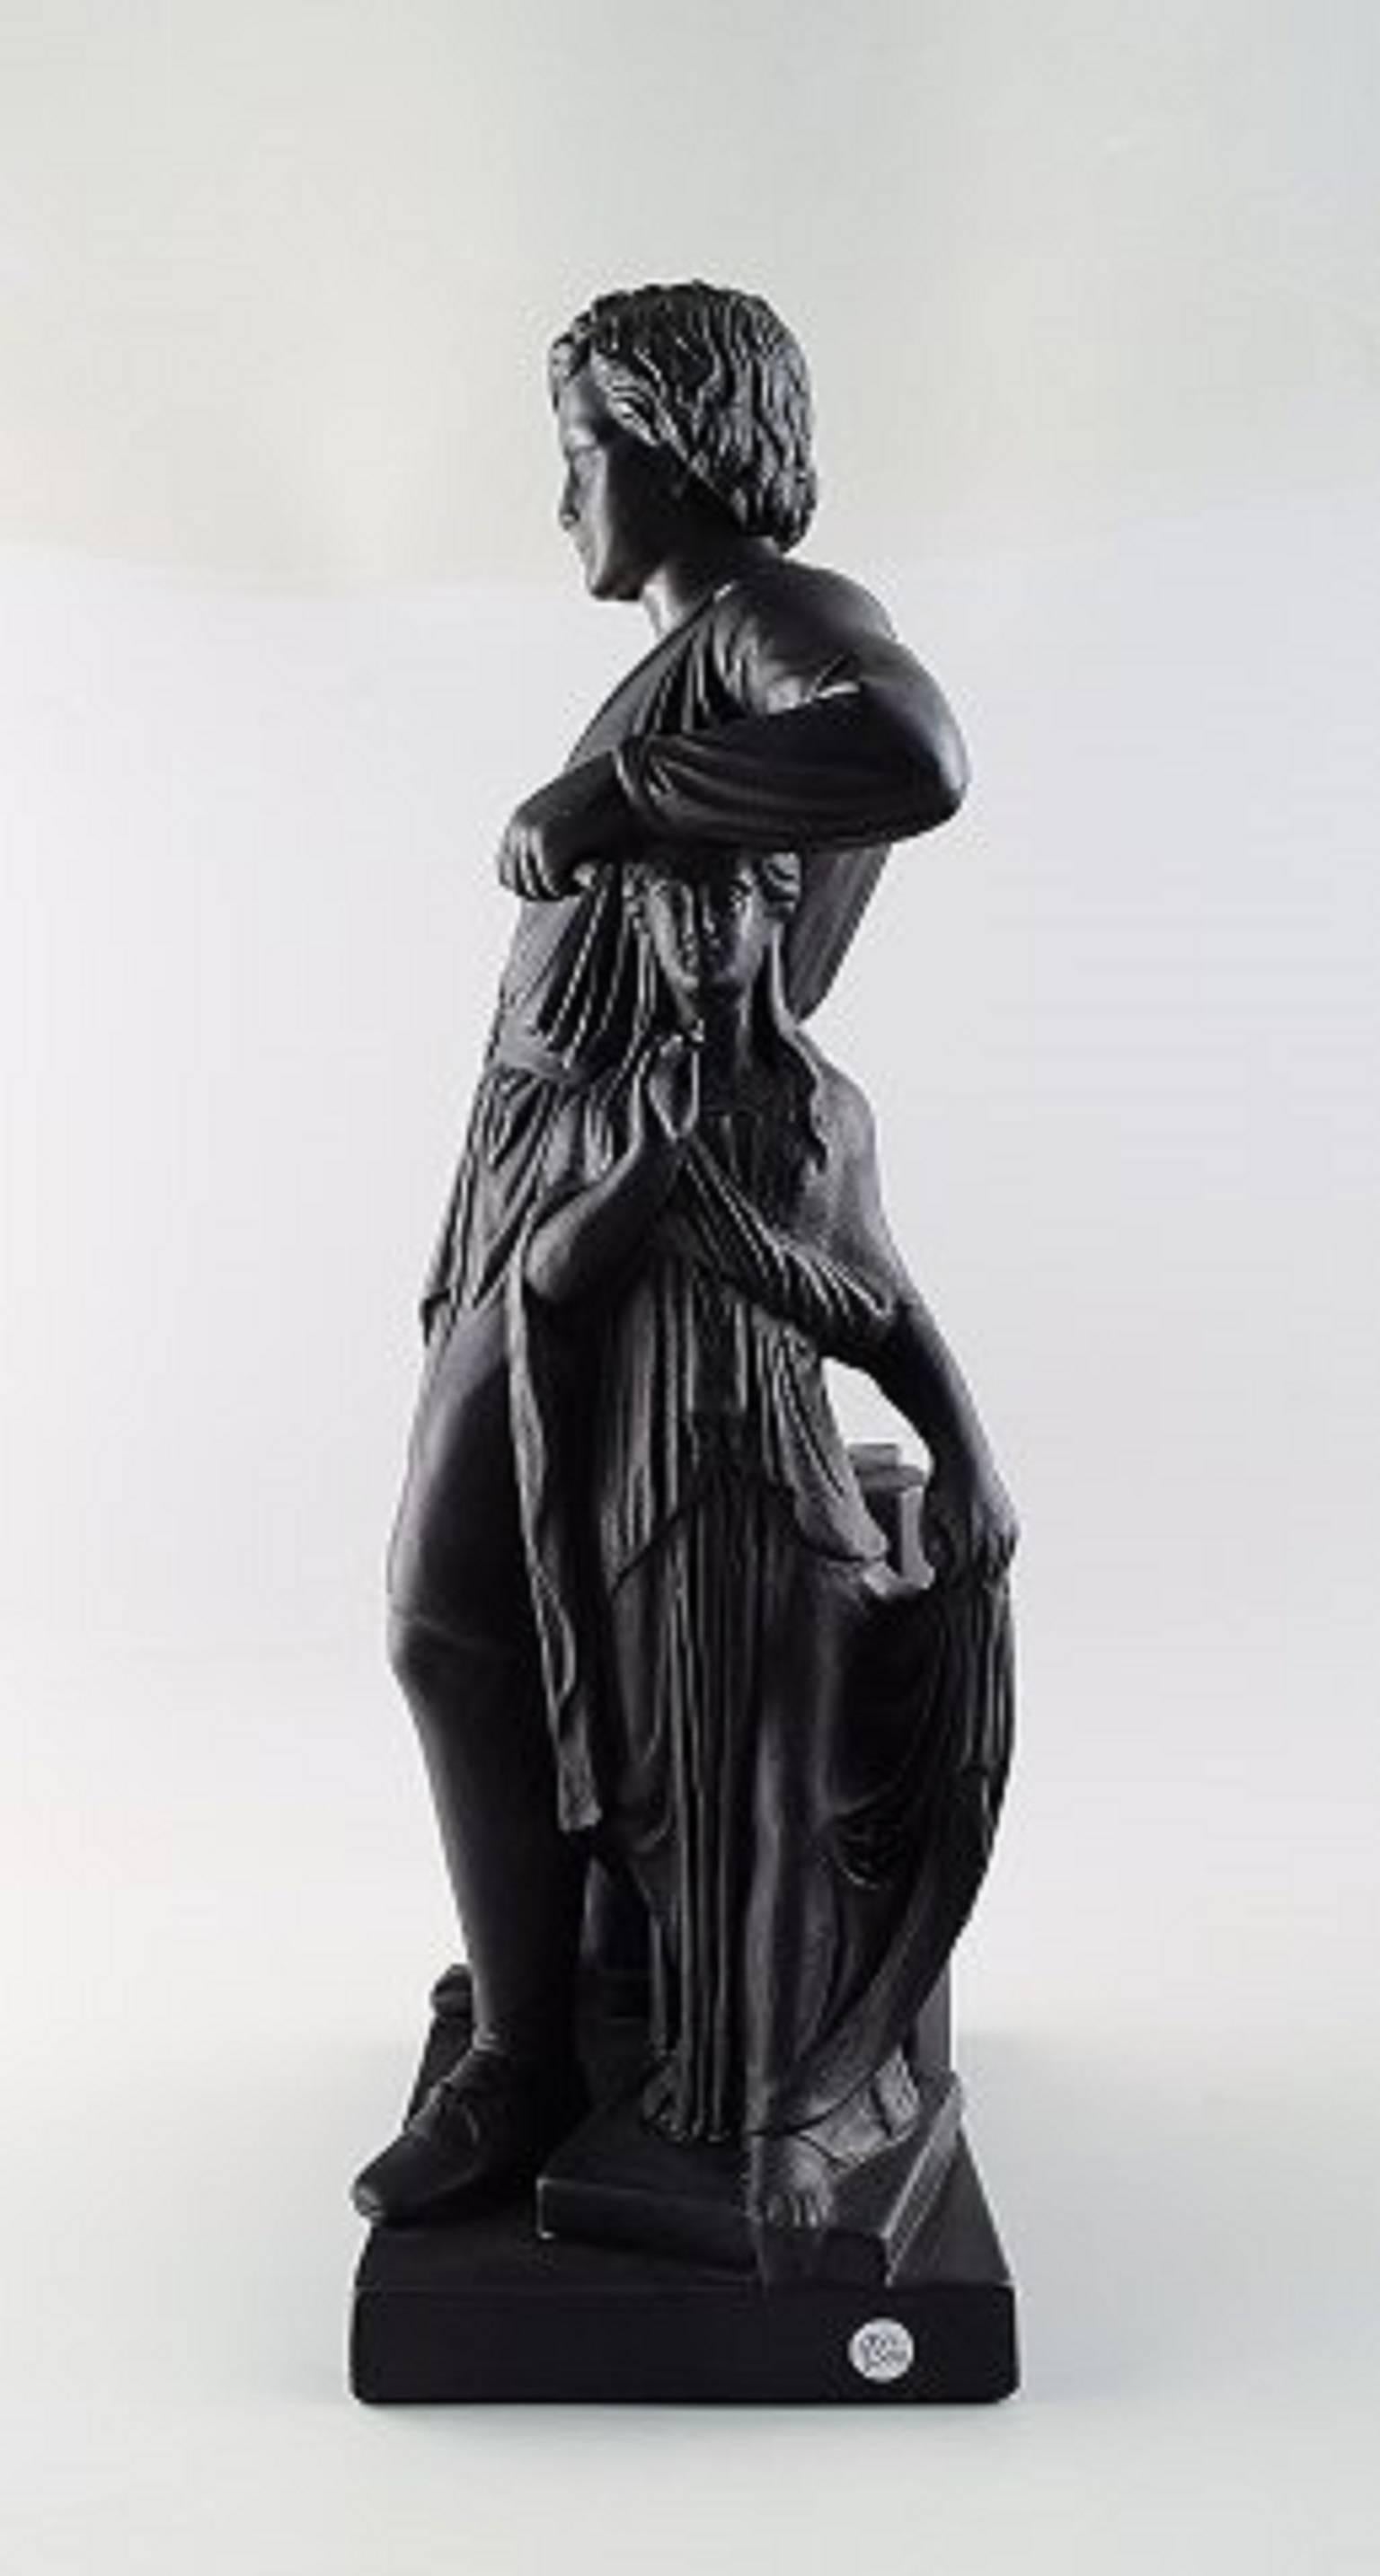 Large and rare L. Hjorth, Bertel Thorvaldsen, black terracotta.
Bornholm, Denmark.
In perfect condition.
Measures 45 x 18 cm.